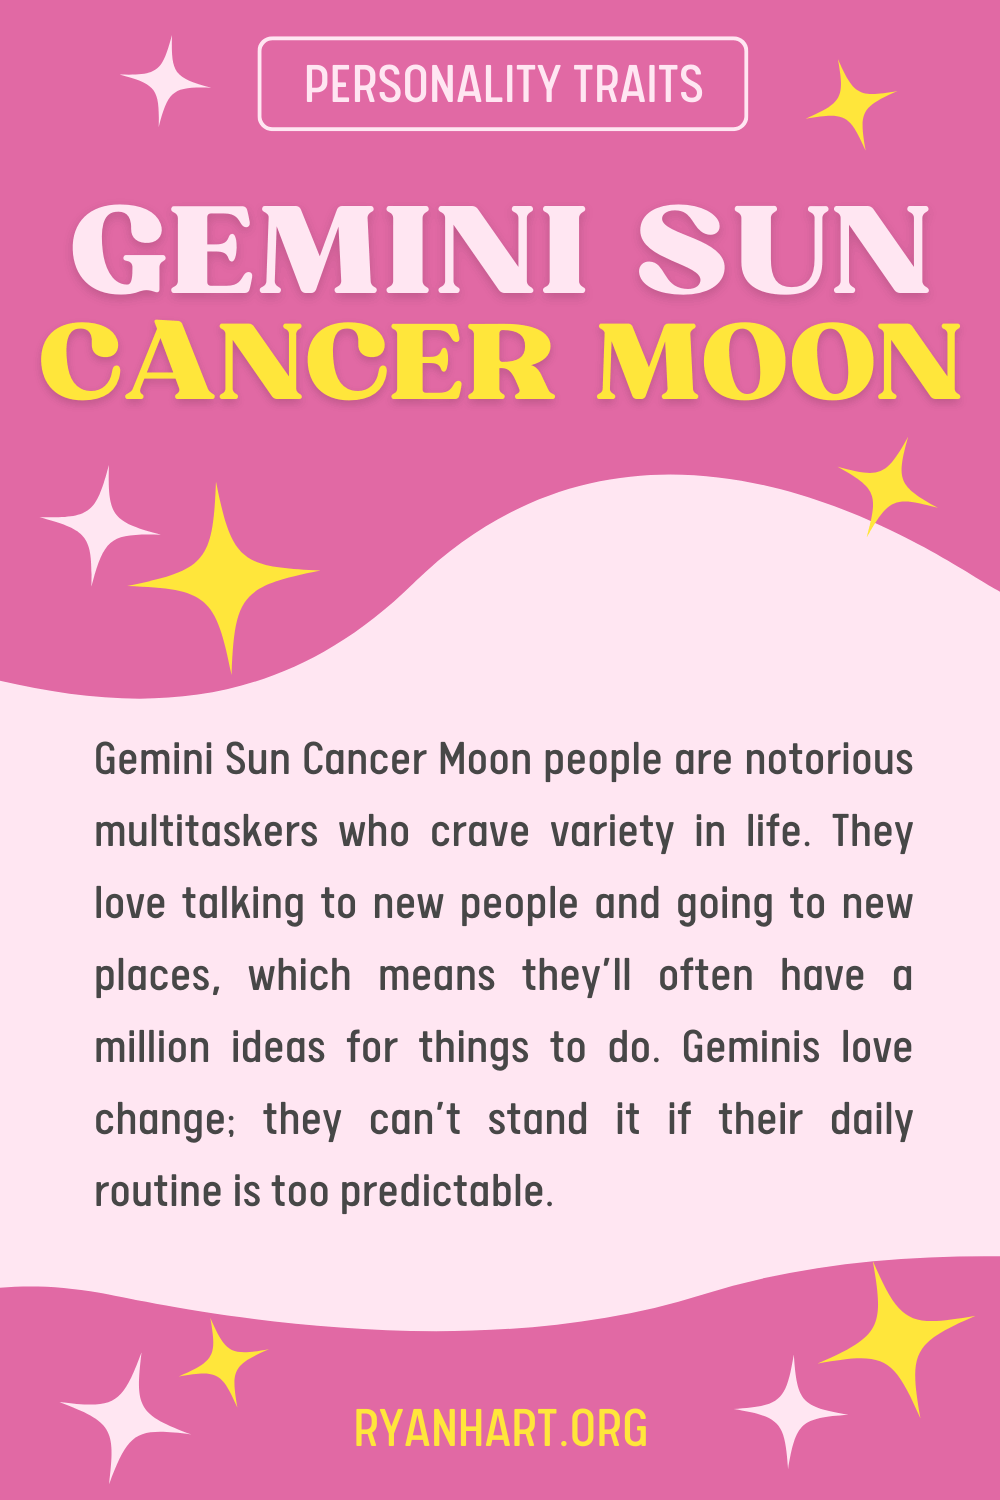 Gemini Sun Cancer Moon Description